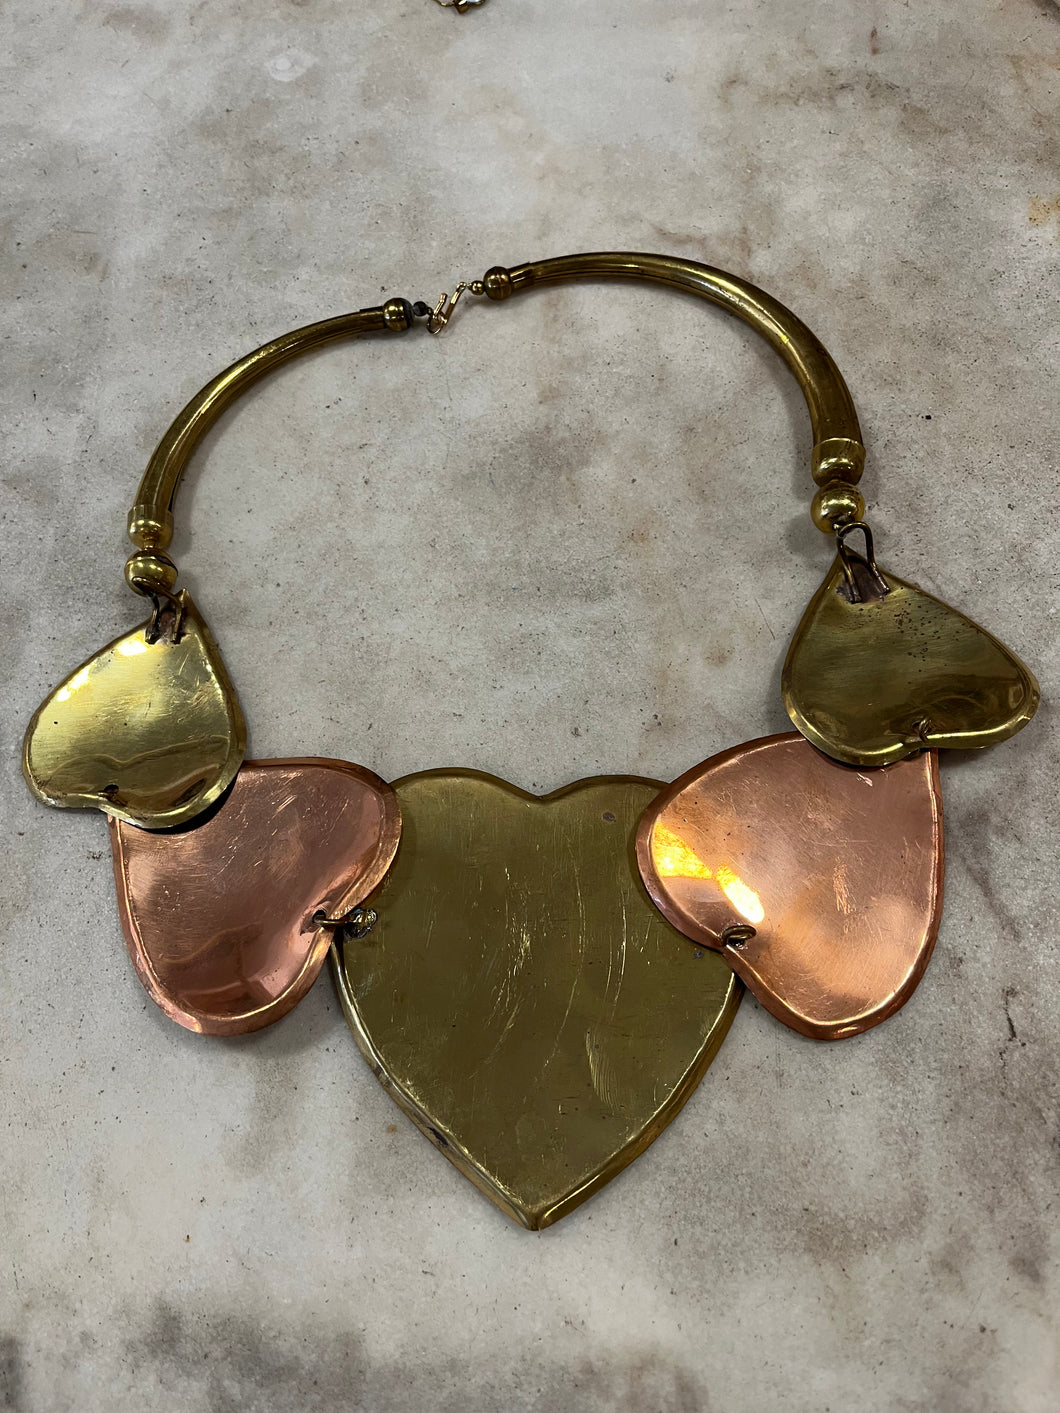 Statement Necklace w/ Handmade Copper & Brass Hearts